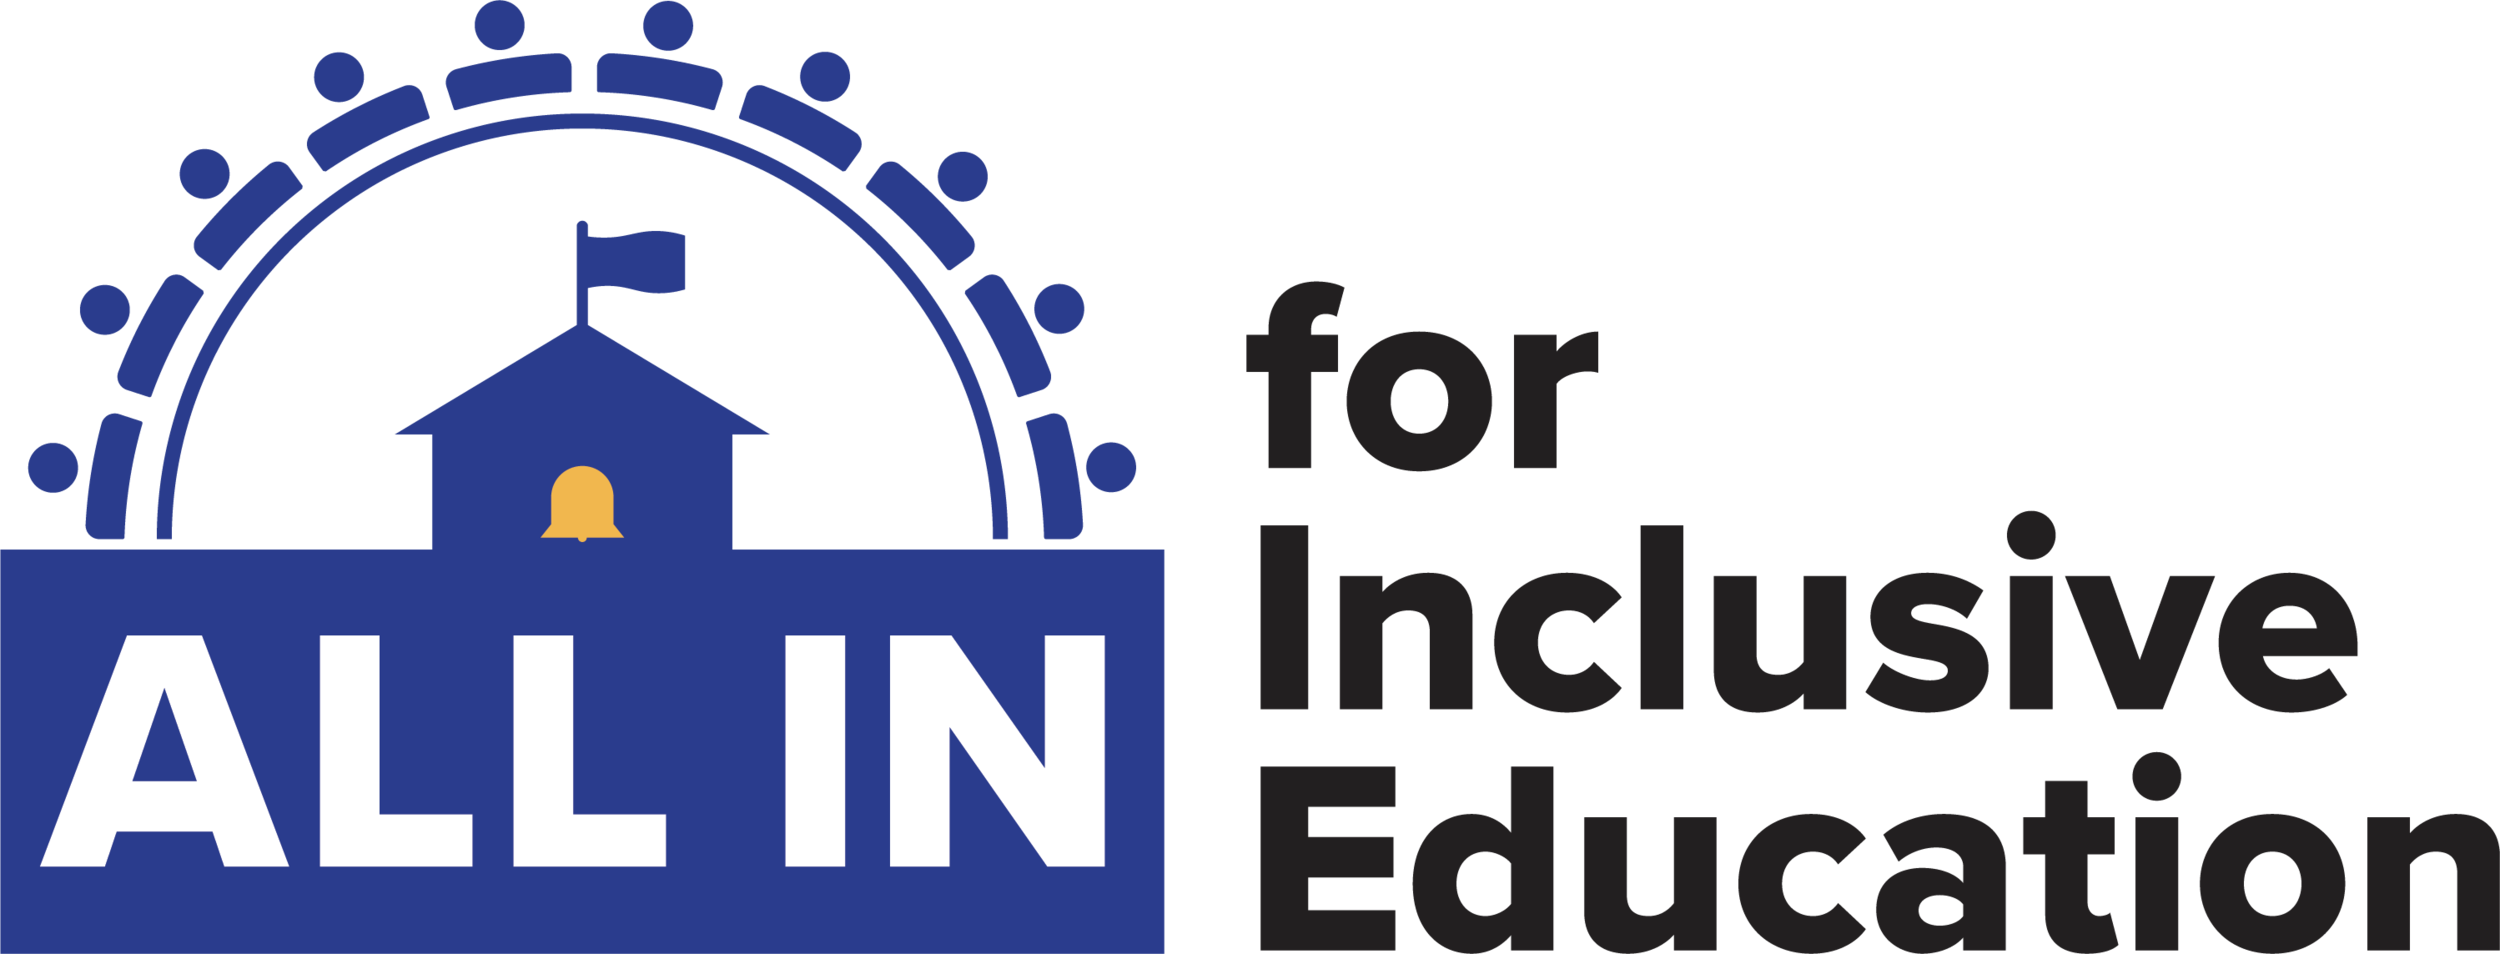 Creative Center for Inclusive Education